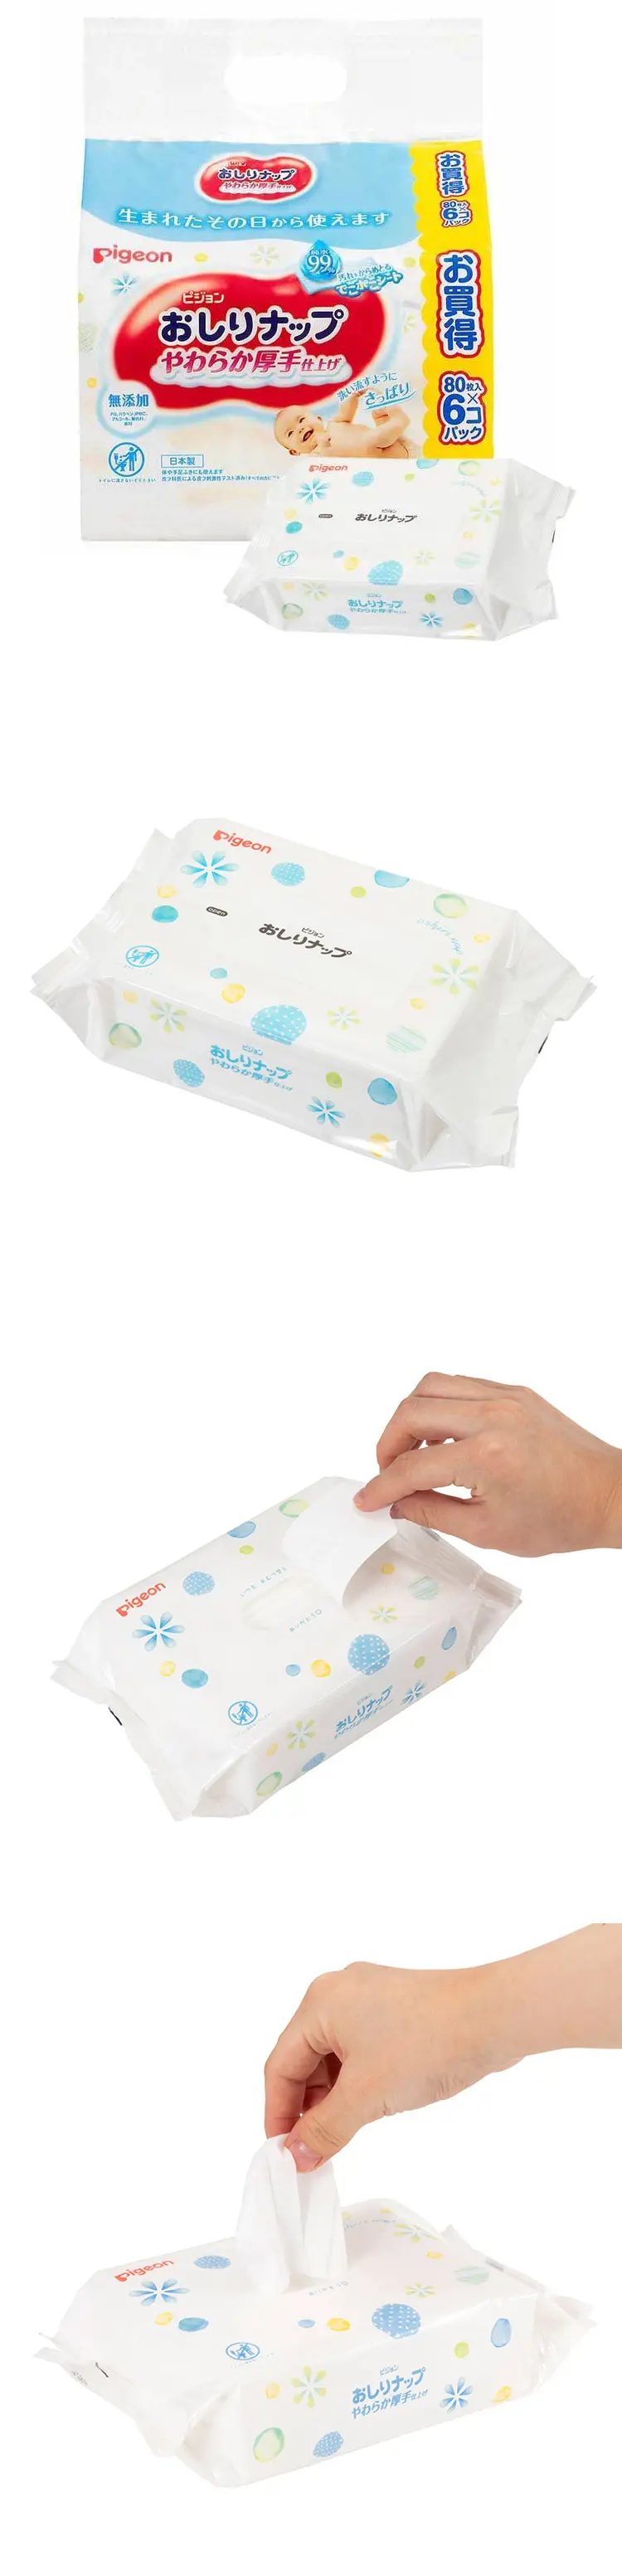 Pigeon 婴儿加厚型纯水湿纸巾-80抽 X 6包